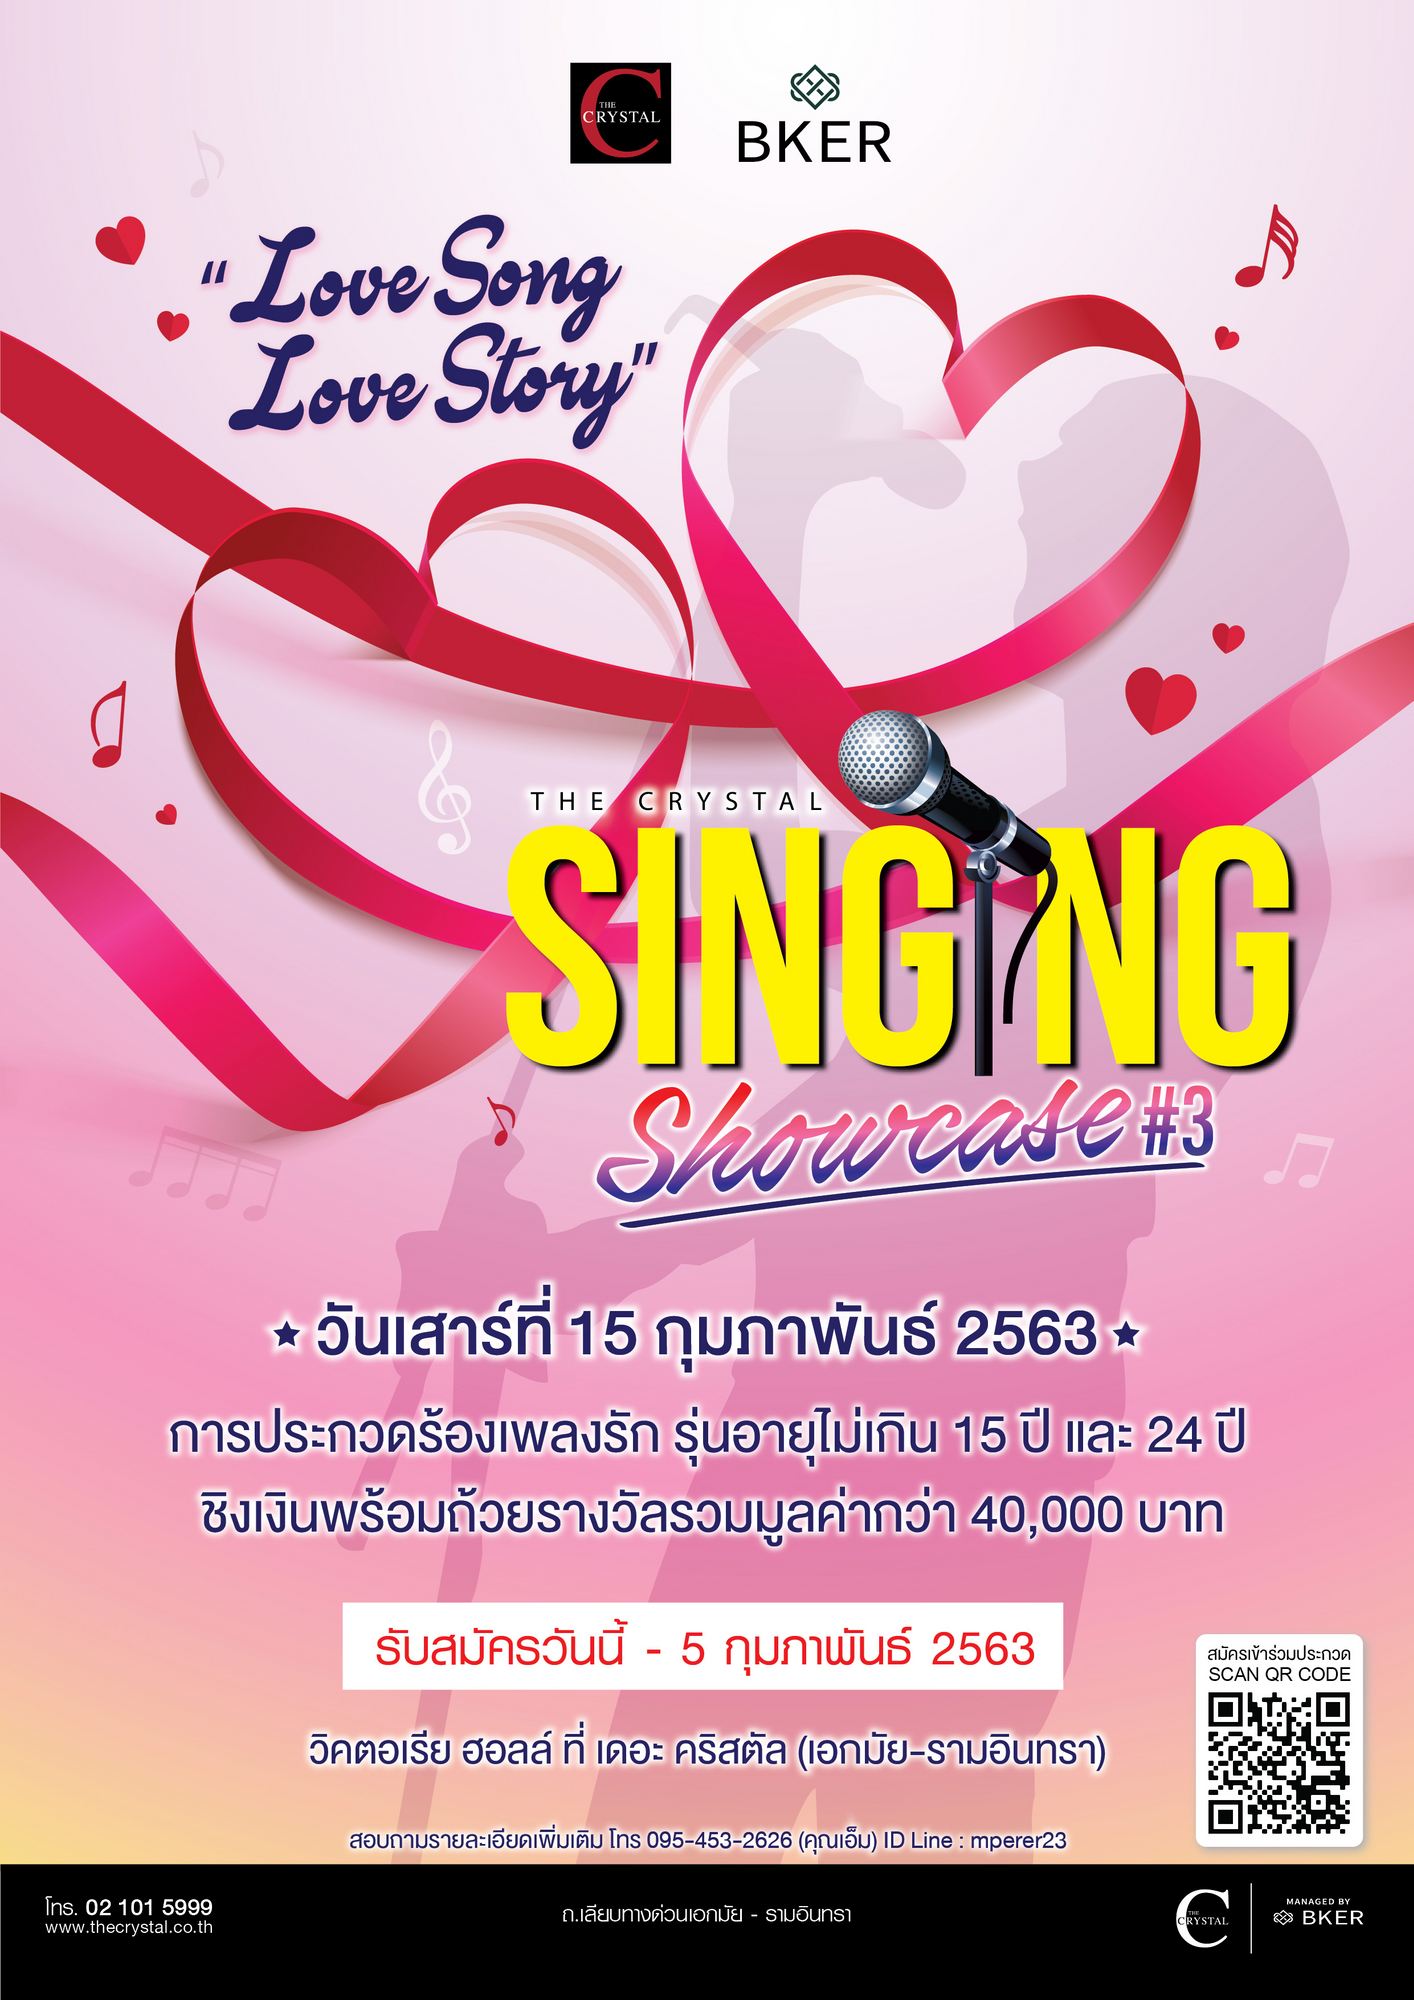 THE CRYSTAL SINGING SHOWCASE #3 LoveSong LoveStory